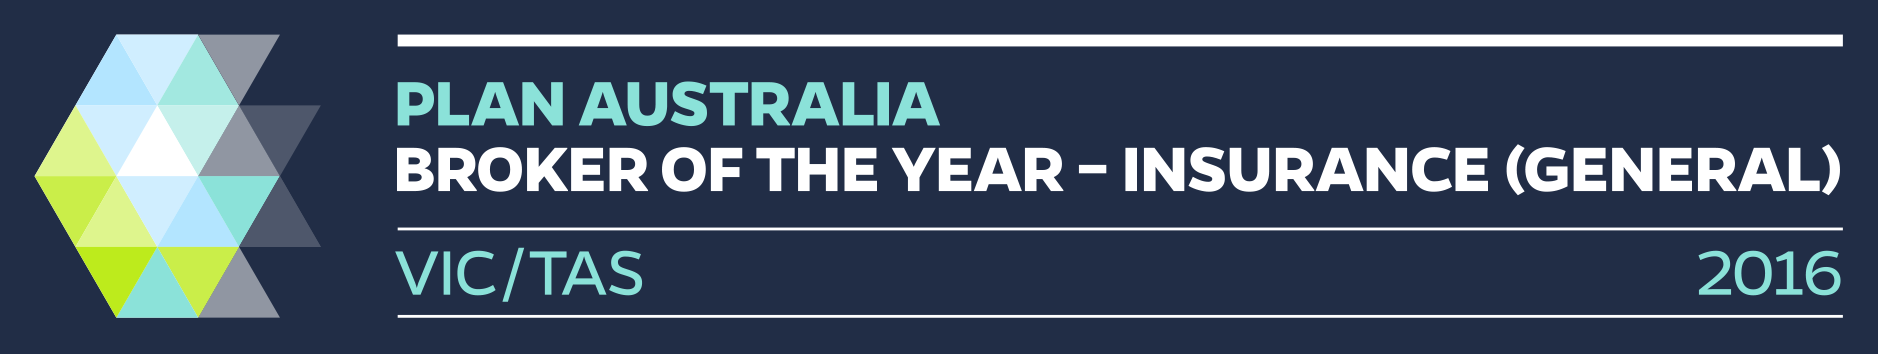 PLAN Australia 2016 Broker of the Year - Insurand VIC/TAS